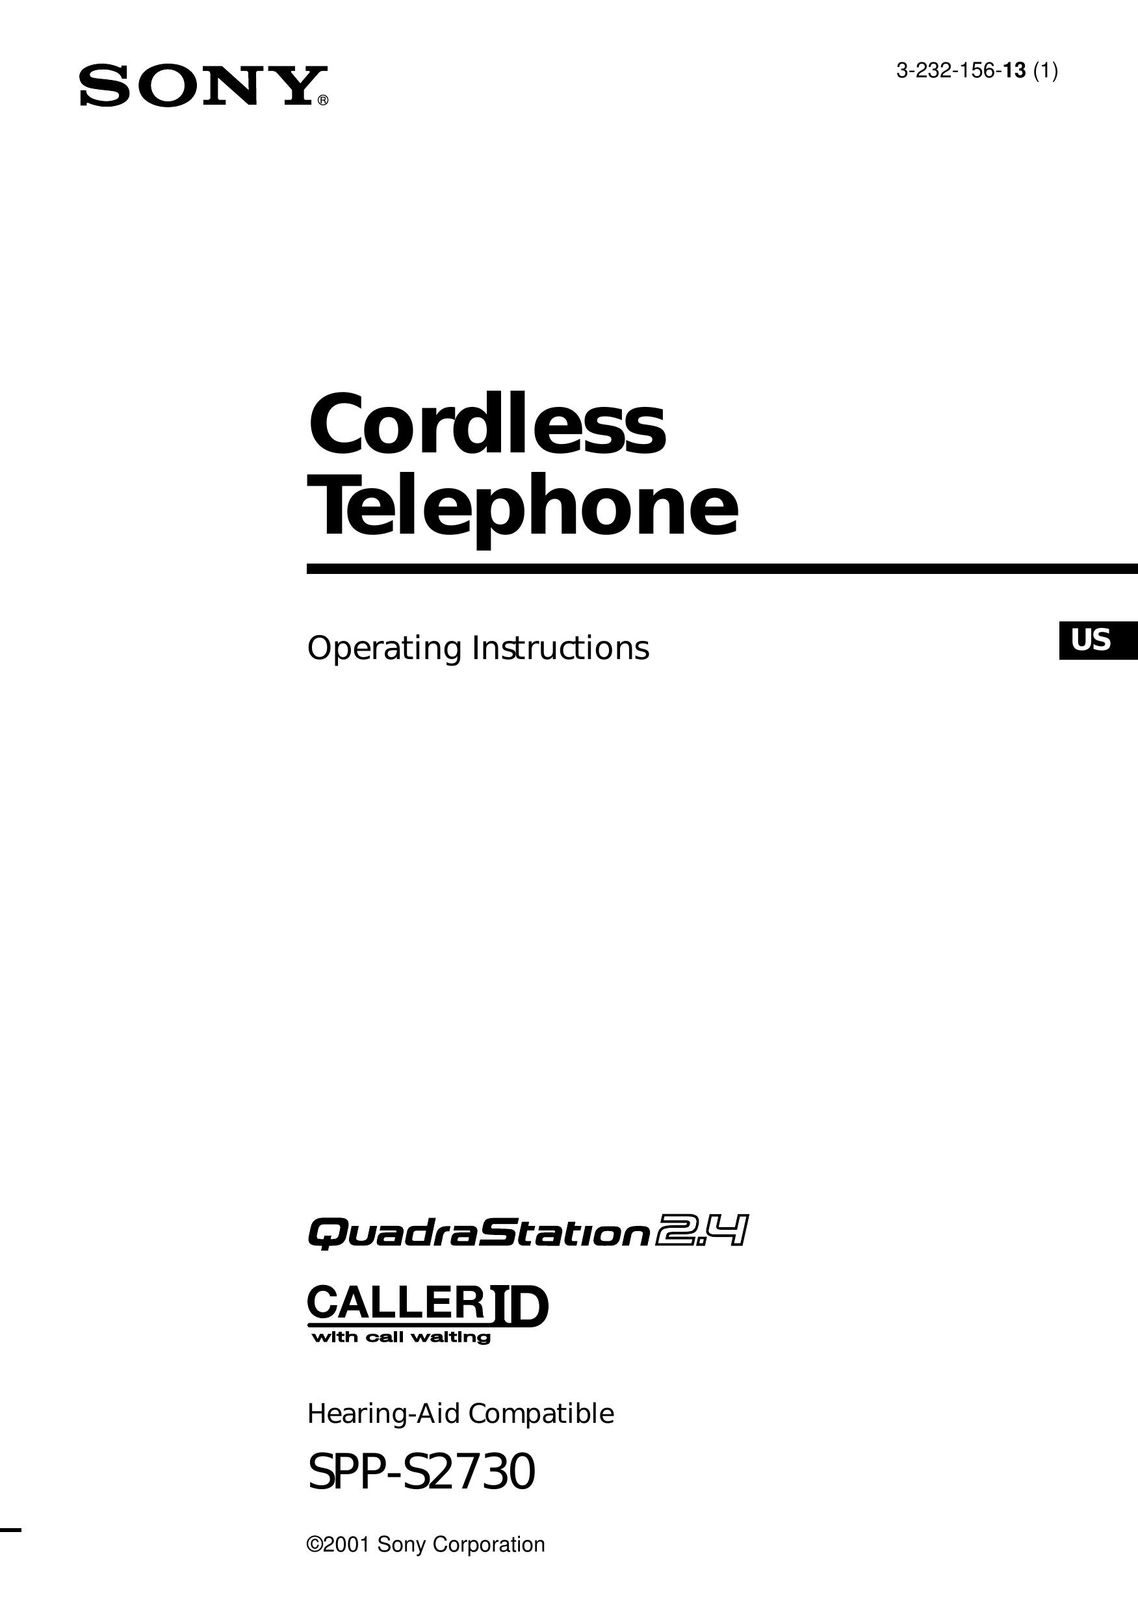 Sony SPP-S2730 Cordless Telephone User Manual